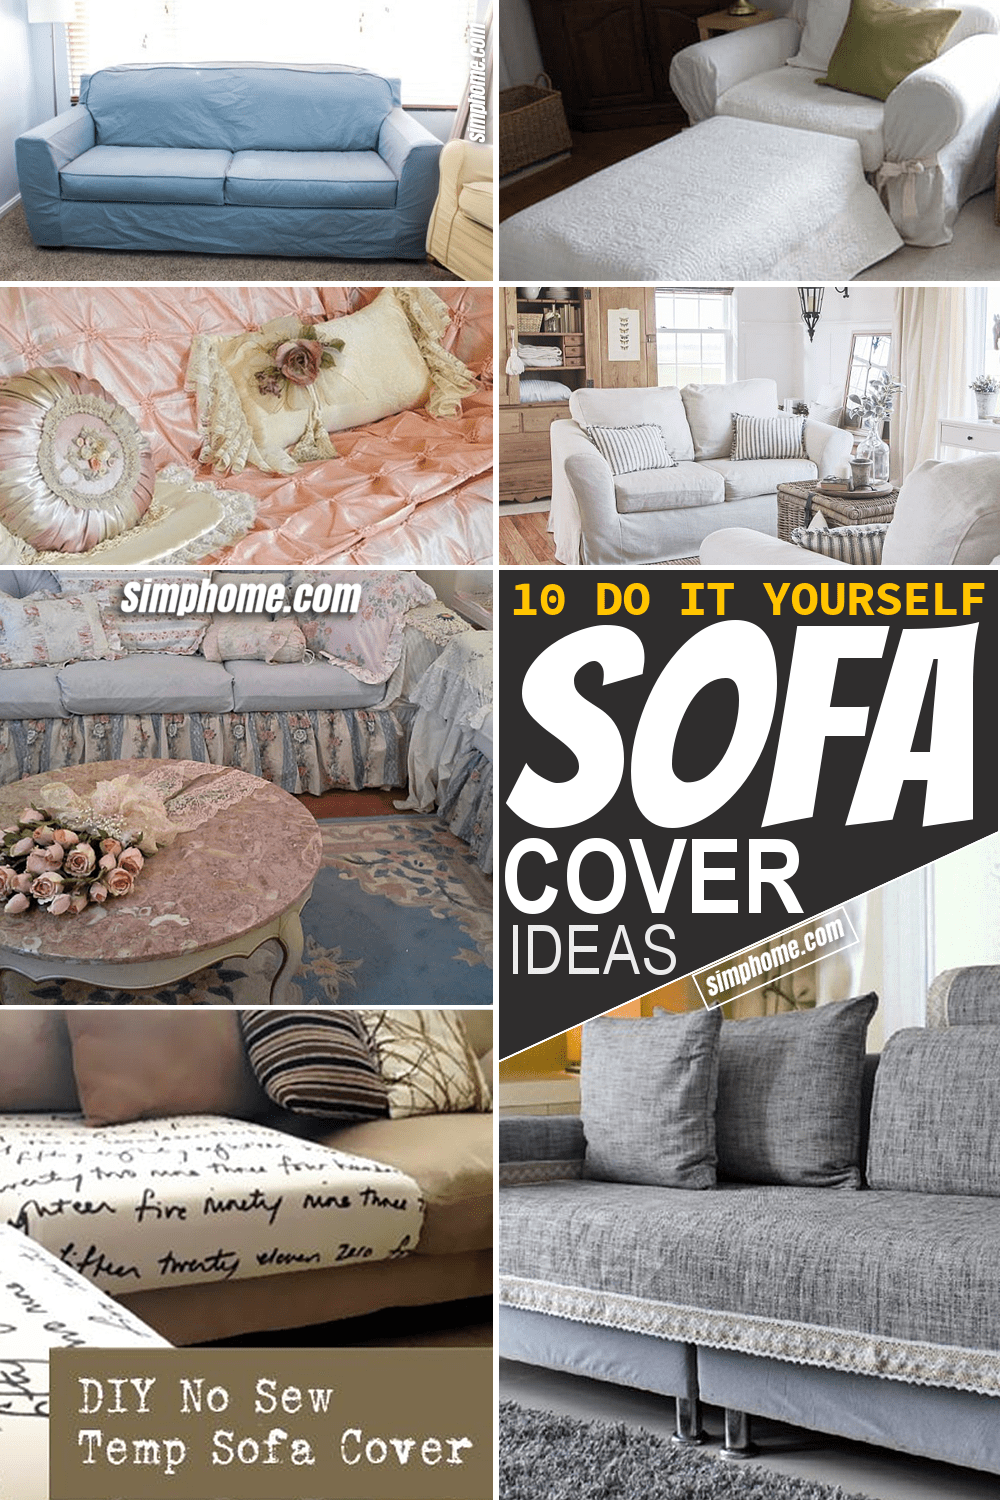 Simphome.com 10 DIY Sofa Cover ideas Featured Image Pinterest